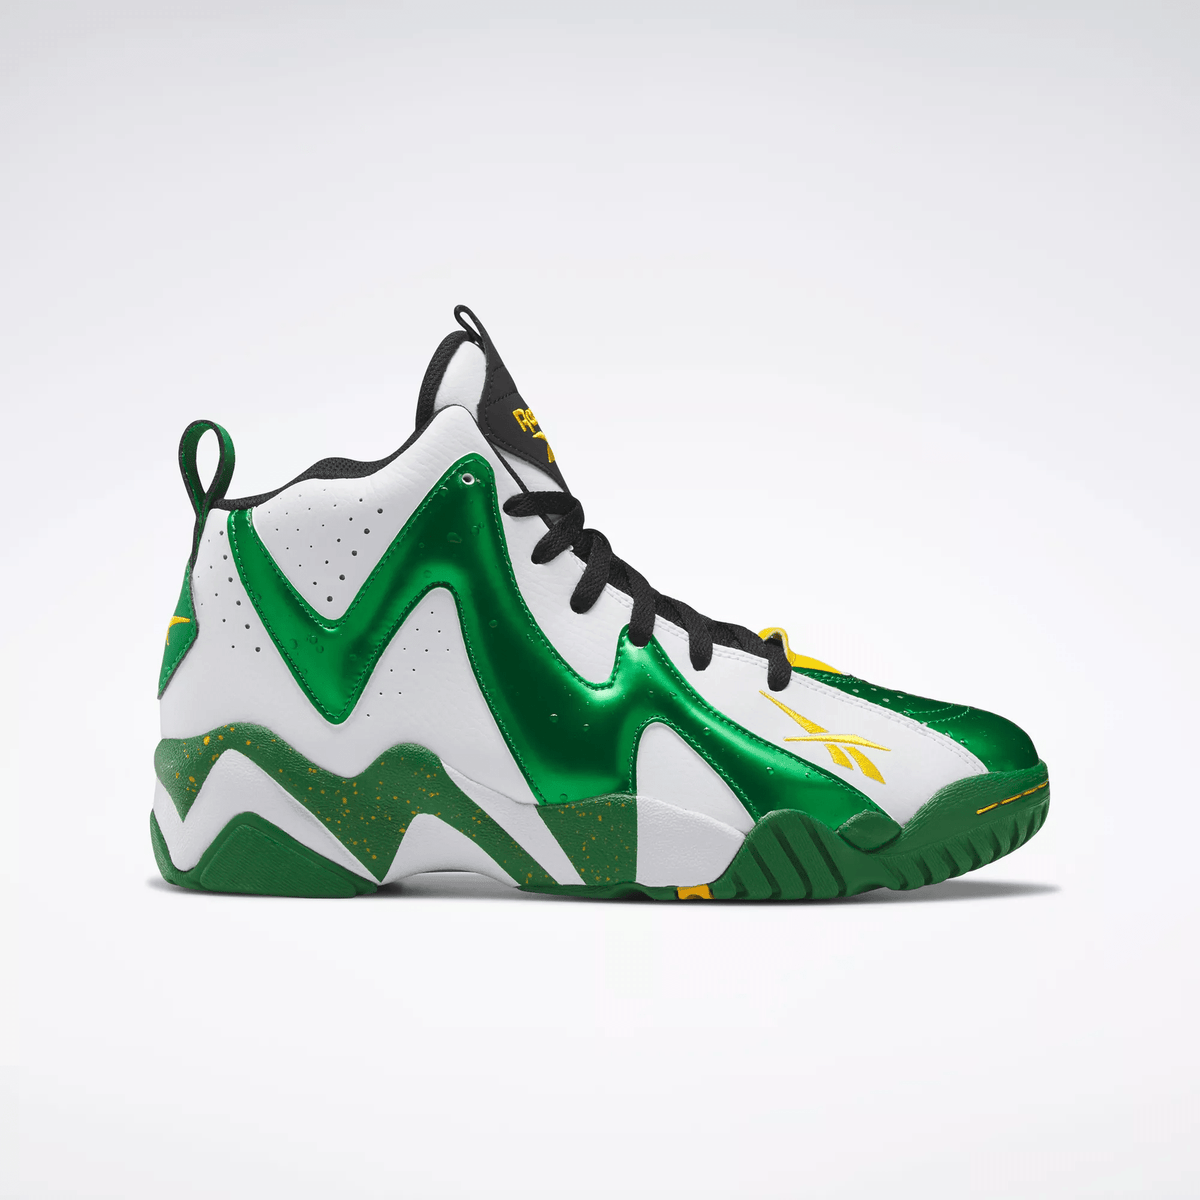 Reebok Unisex Hurrikaze II Men's Basketball Shoes Green